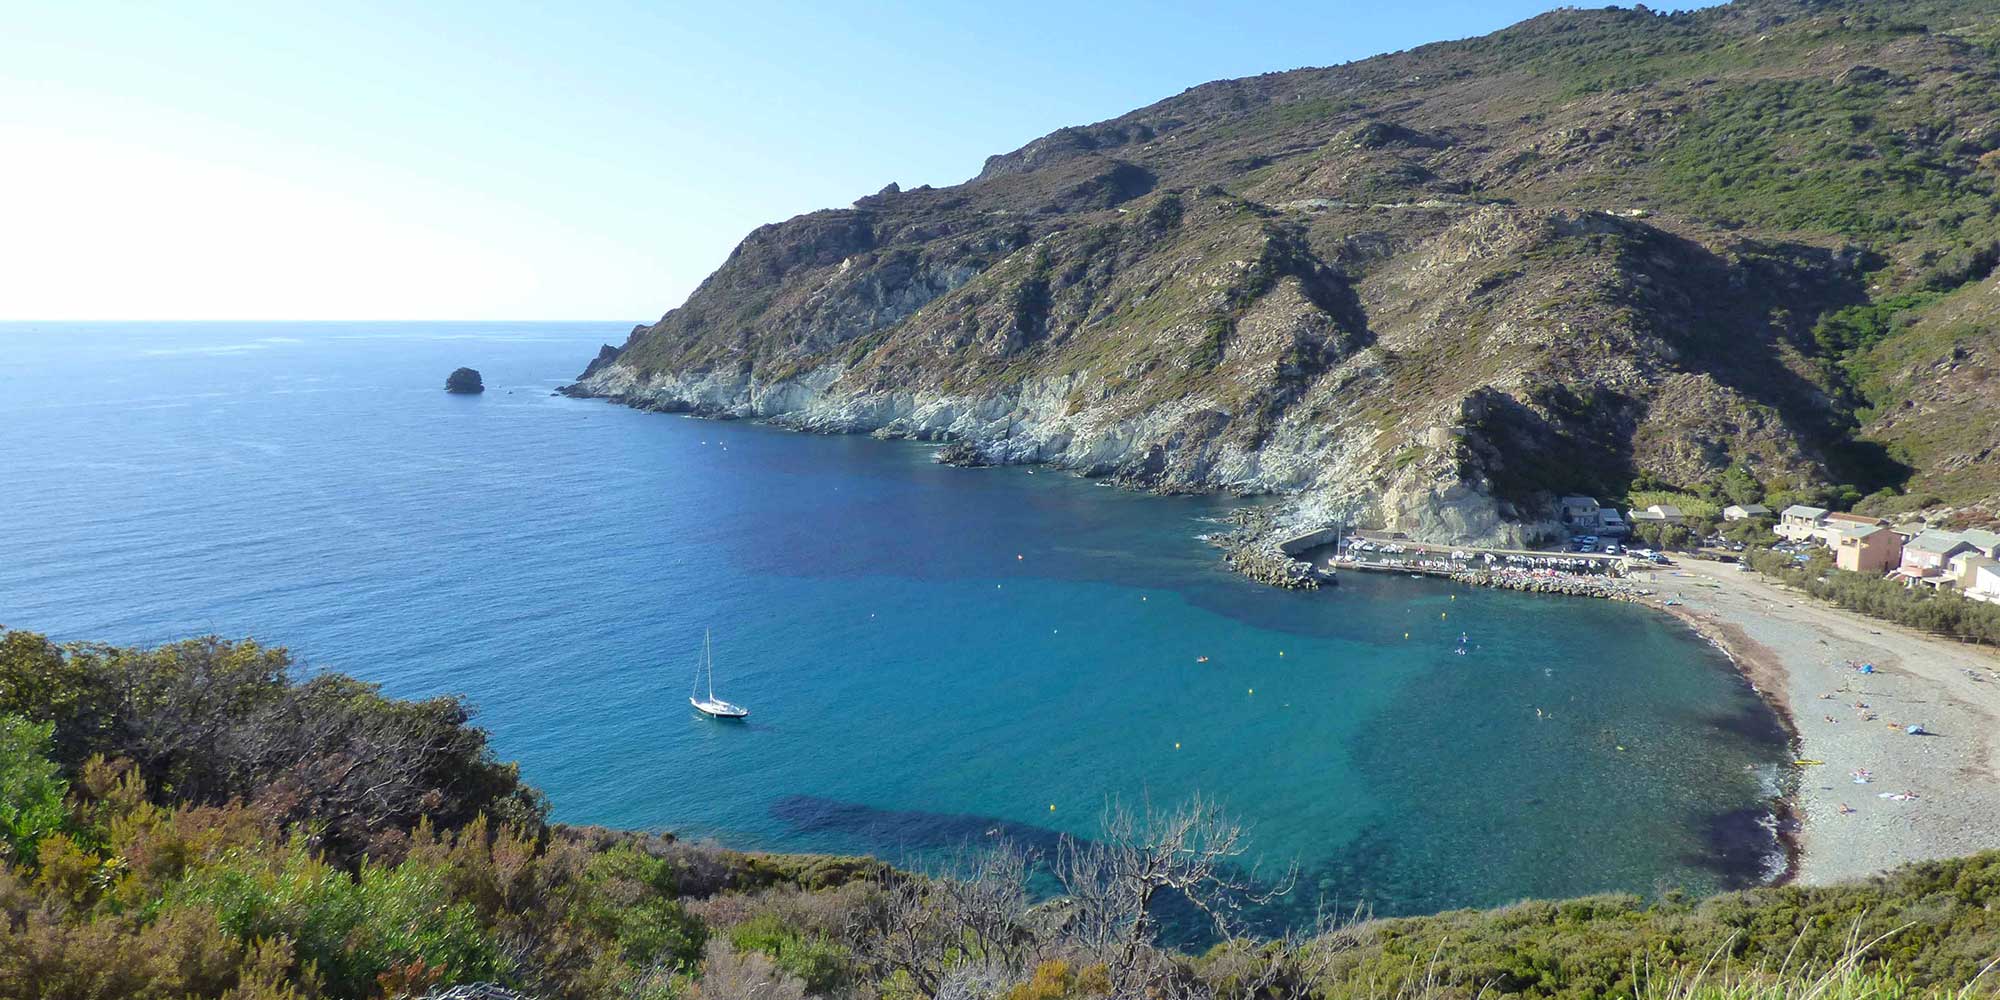 Location de vacances à la marine de Barrettali (Giottani) en Corse du Nord (Cap Corse)